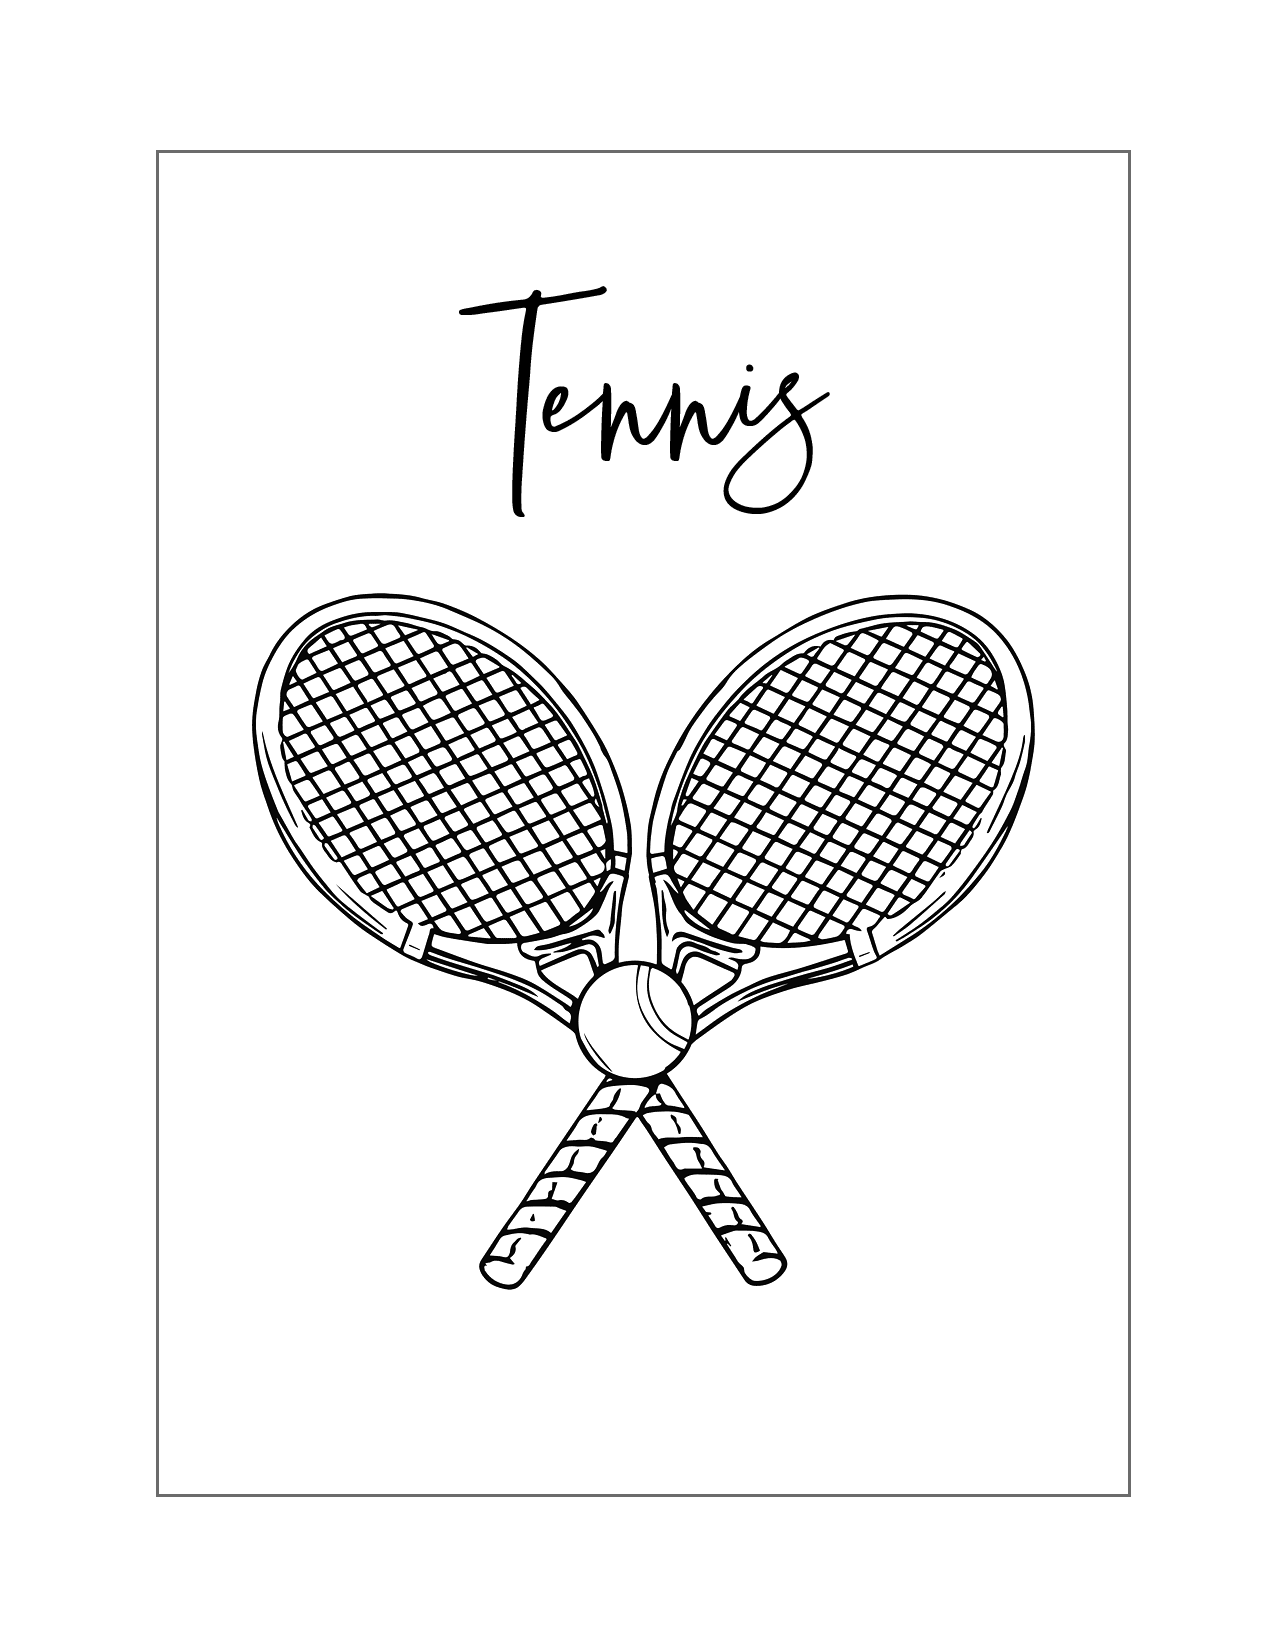 Tennis Raquets Coloring Page